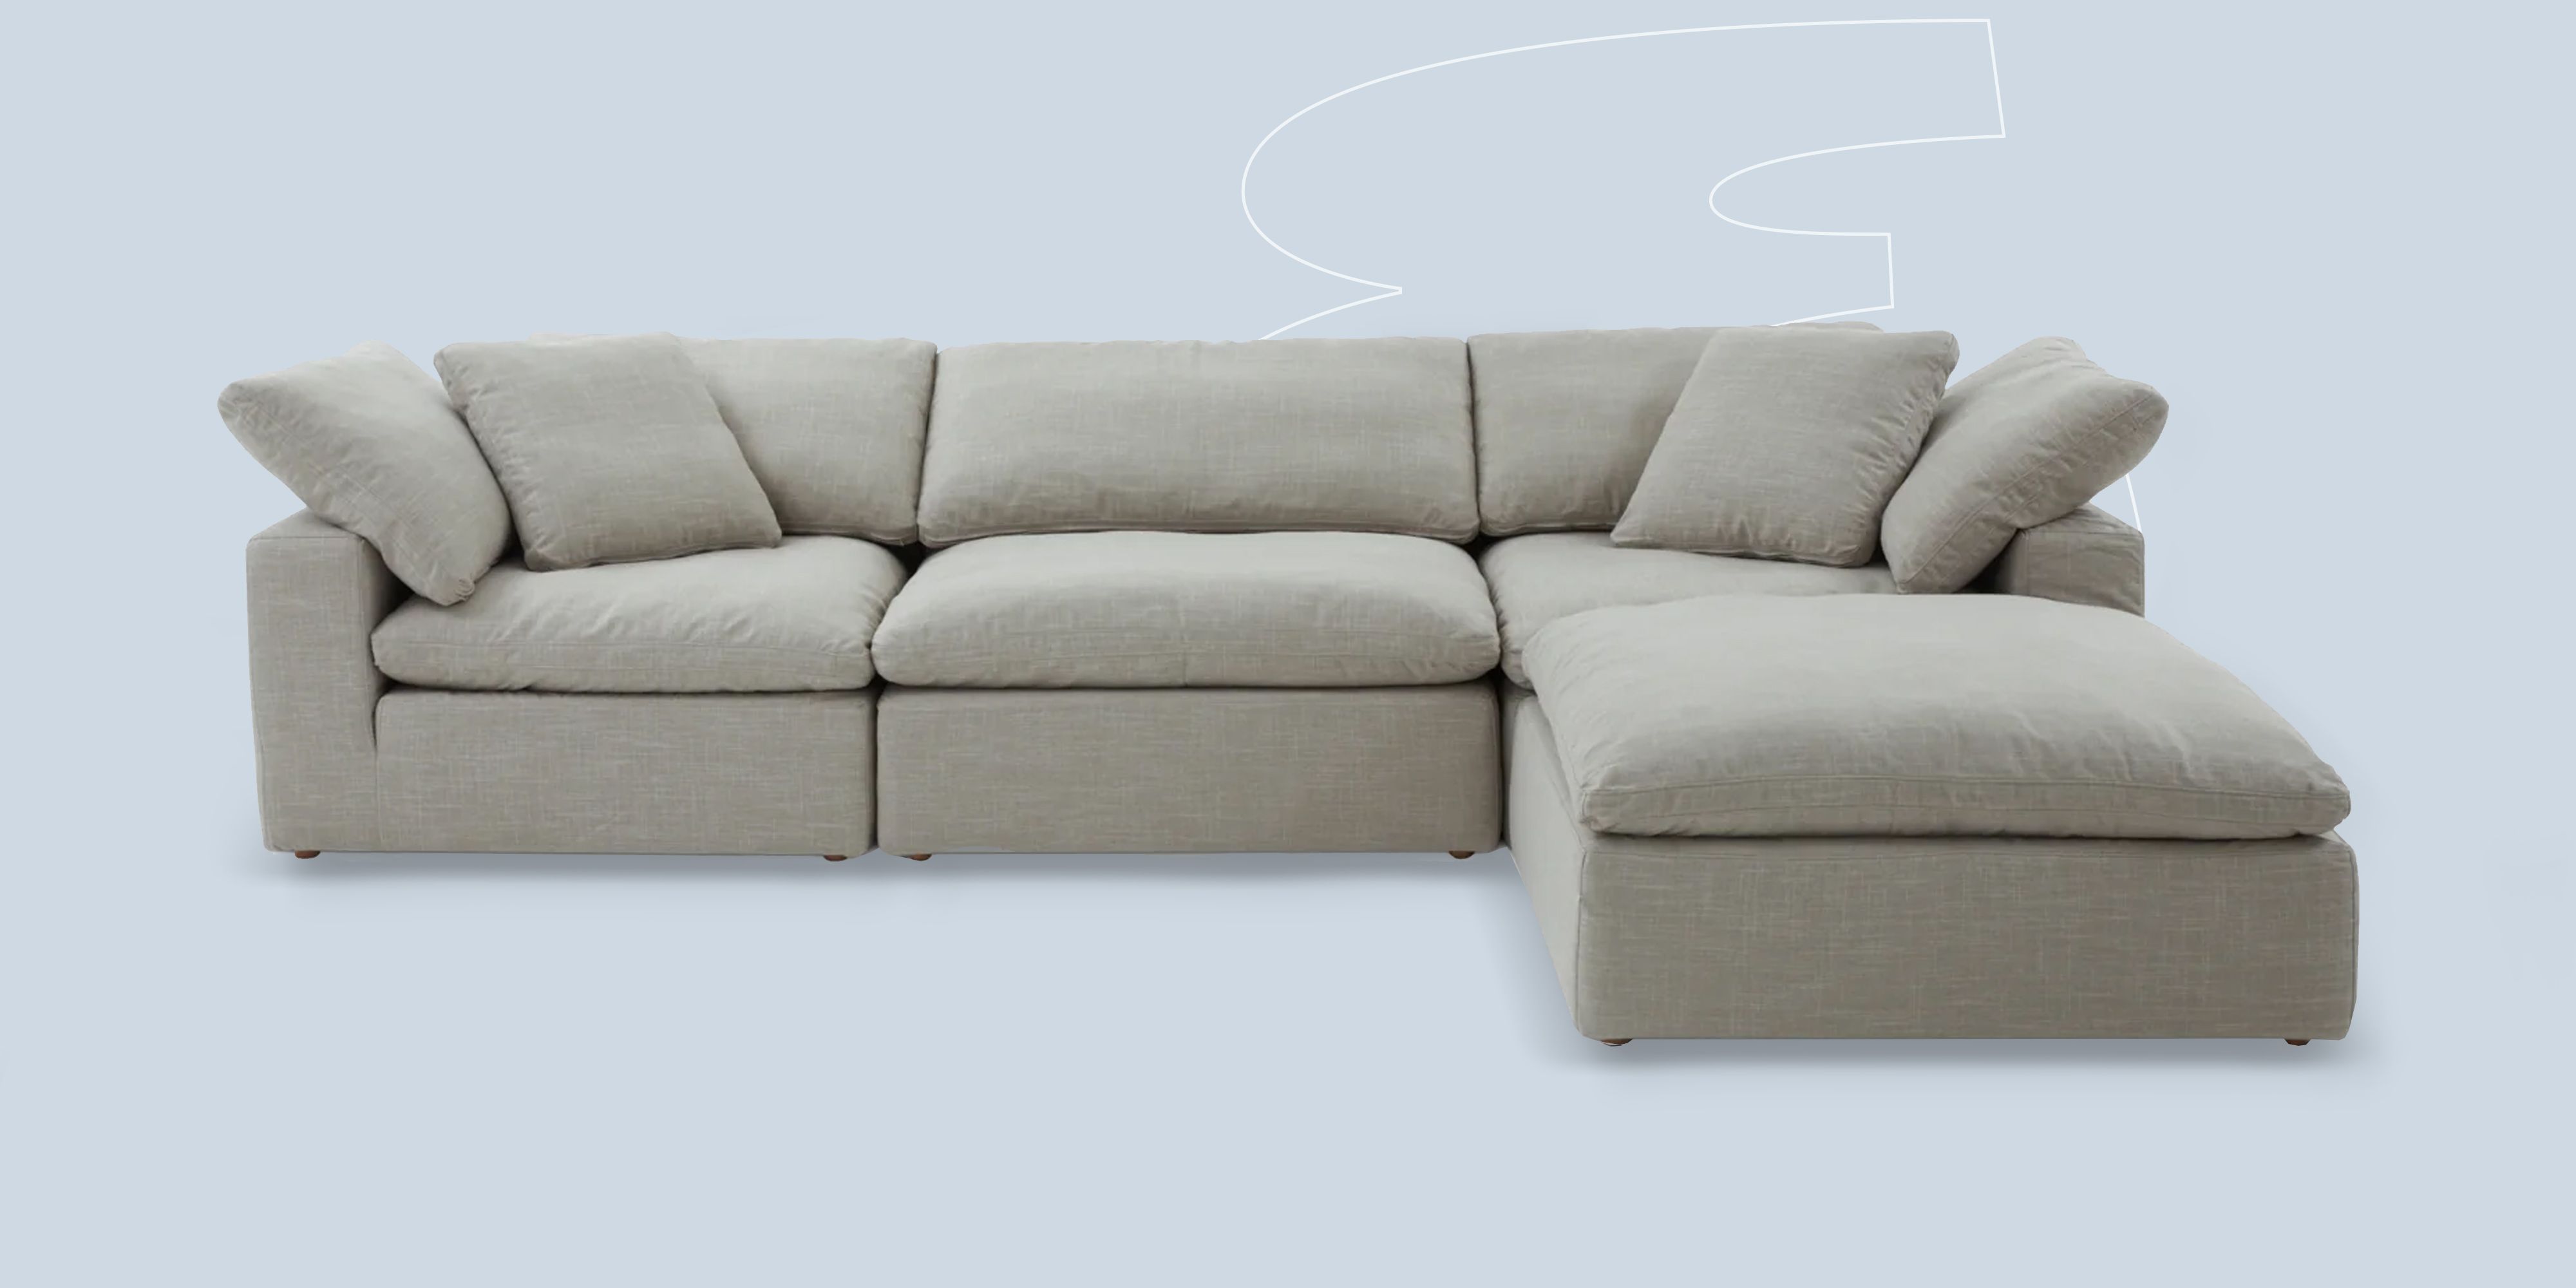 7 Seater Modern Exclusive Design L Corner Sofa Set With Soft